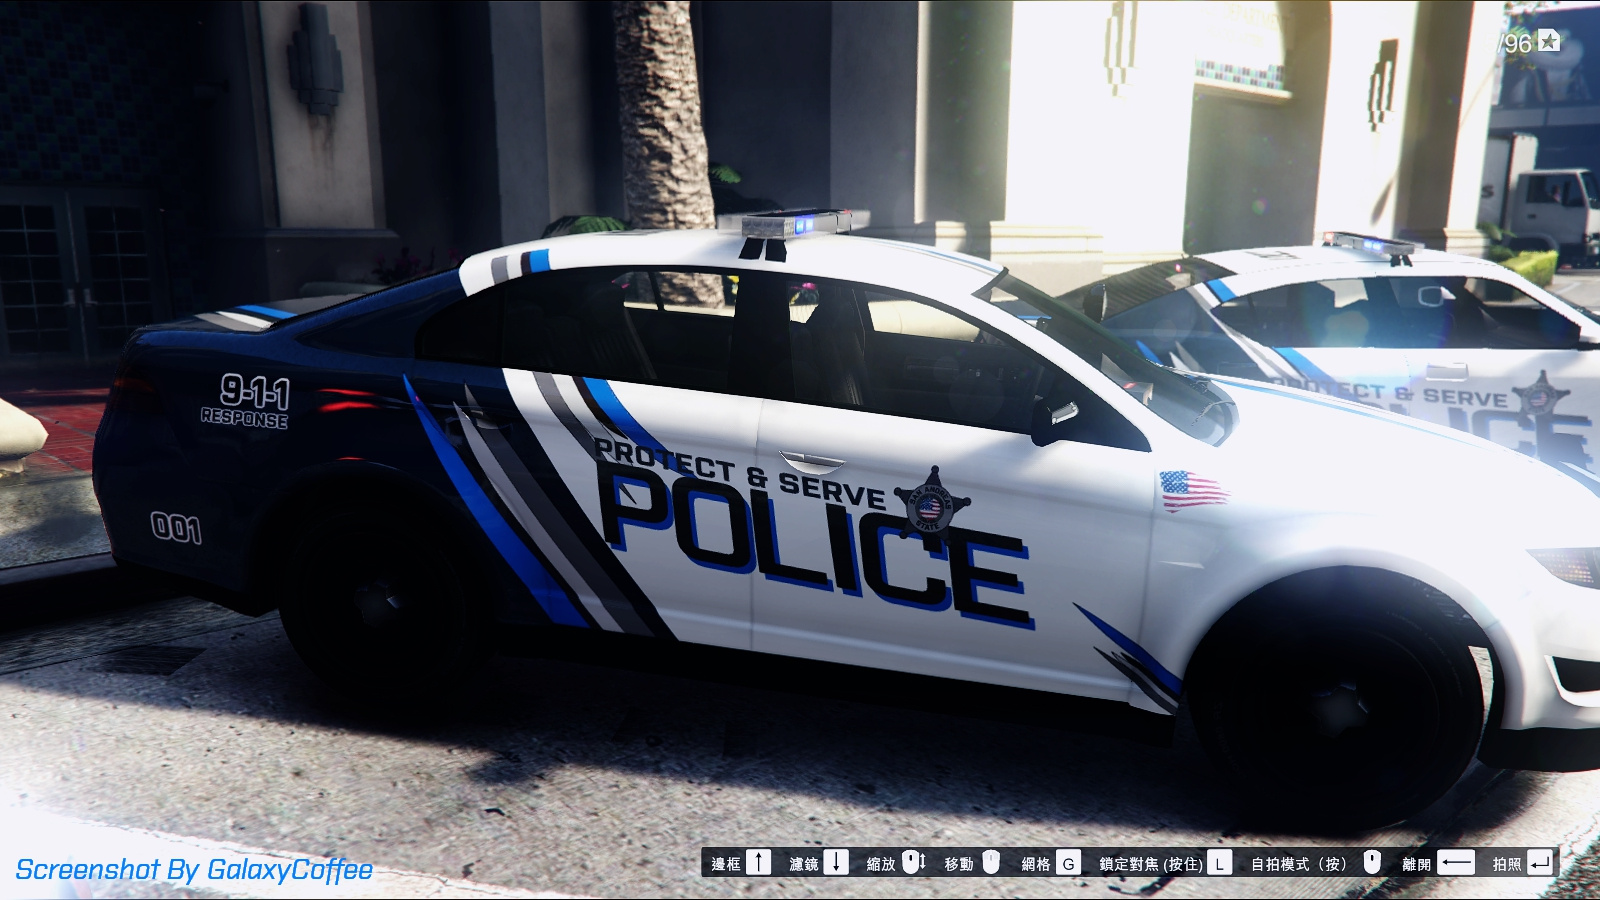 Policeman speed. NFS Police cars GTA 5. Fluence в стиле Police. Ghost livery Police. Пленка стиль полиция.